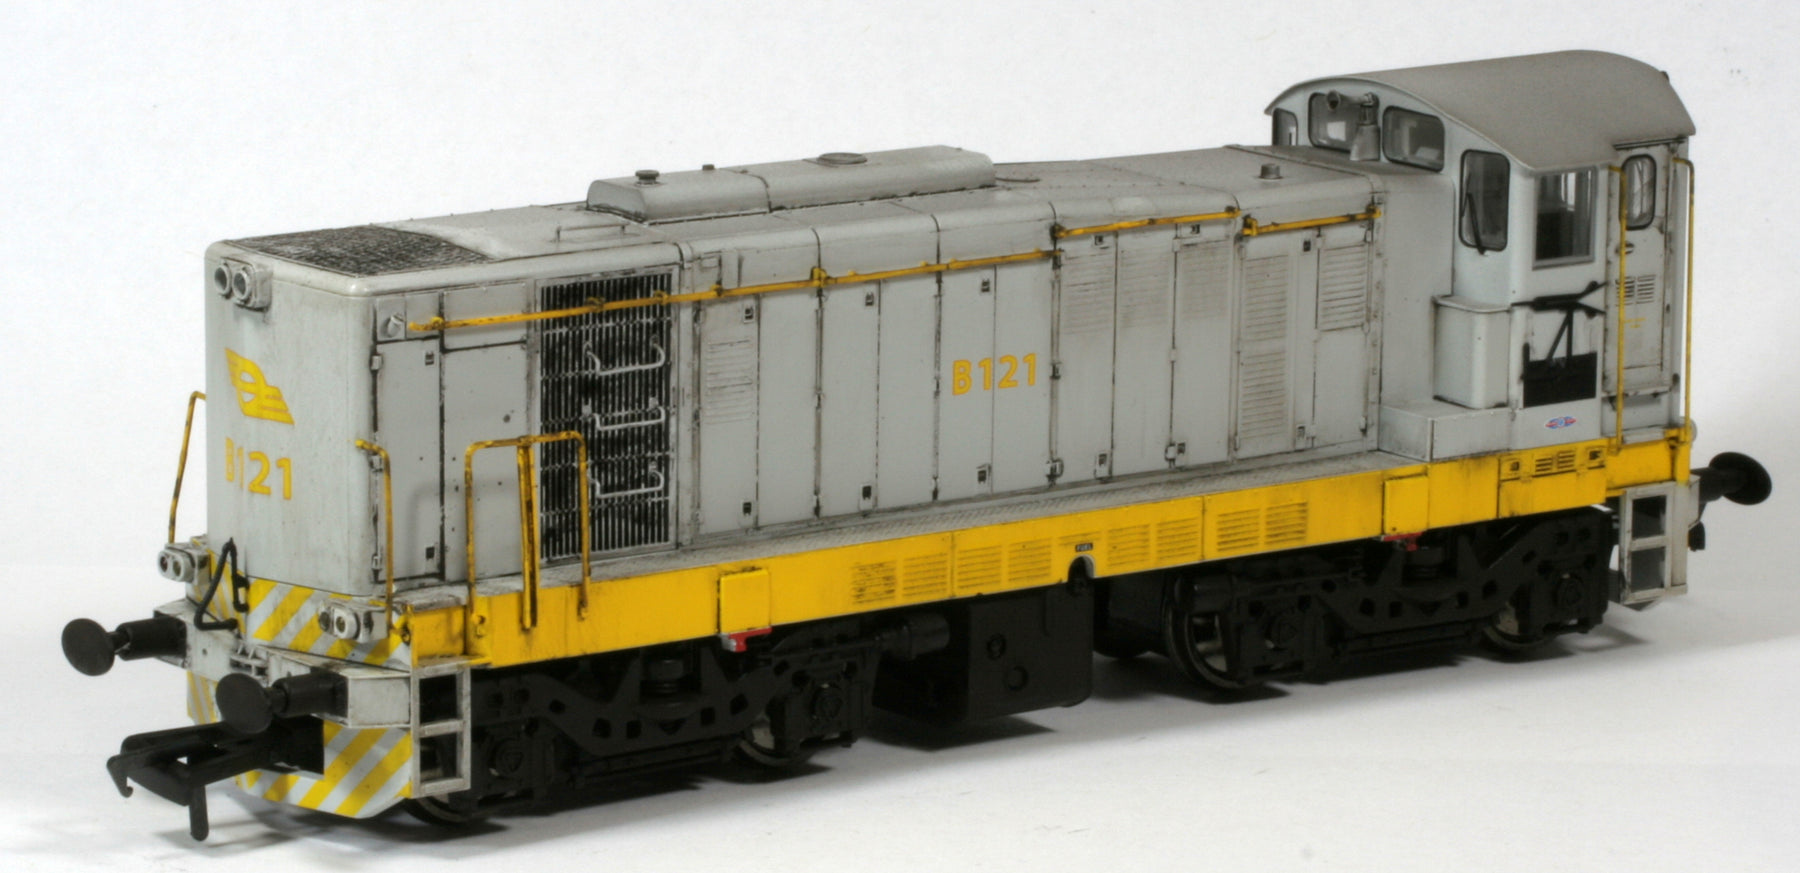 Weathering Murphy Models 121 Class Locomotives With Mick Bonwick